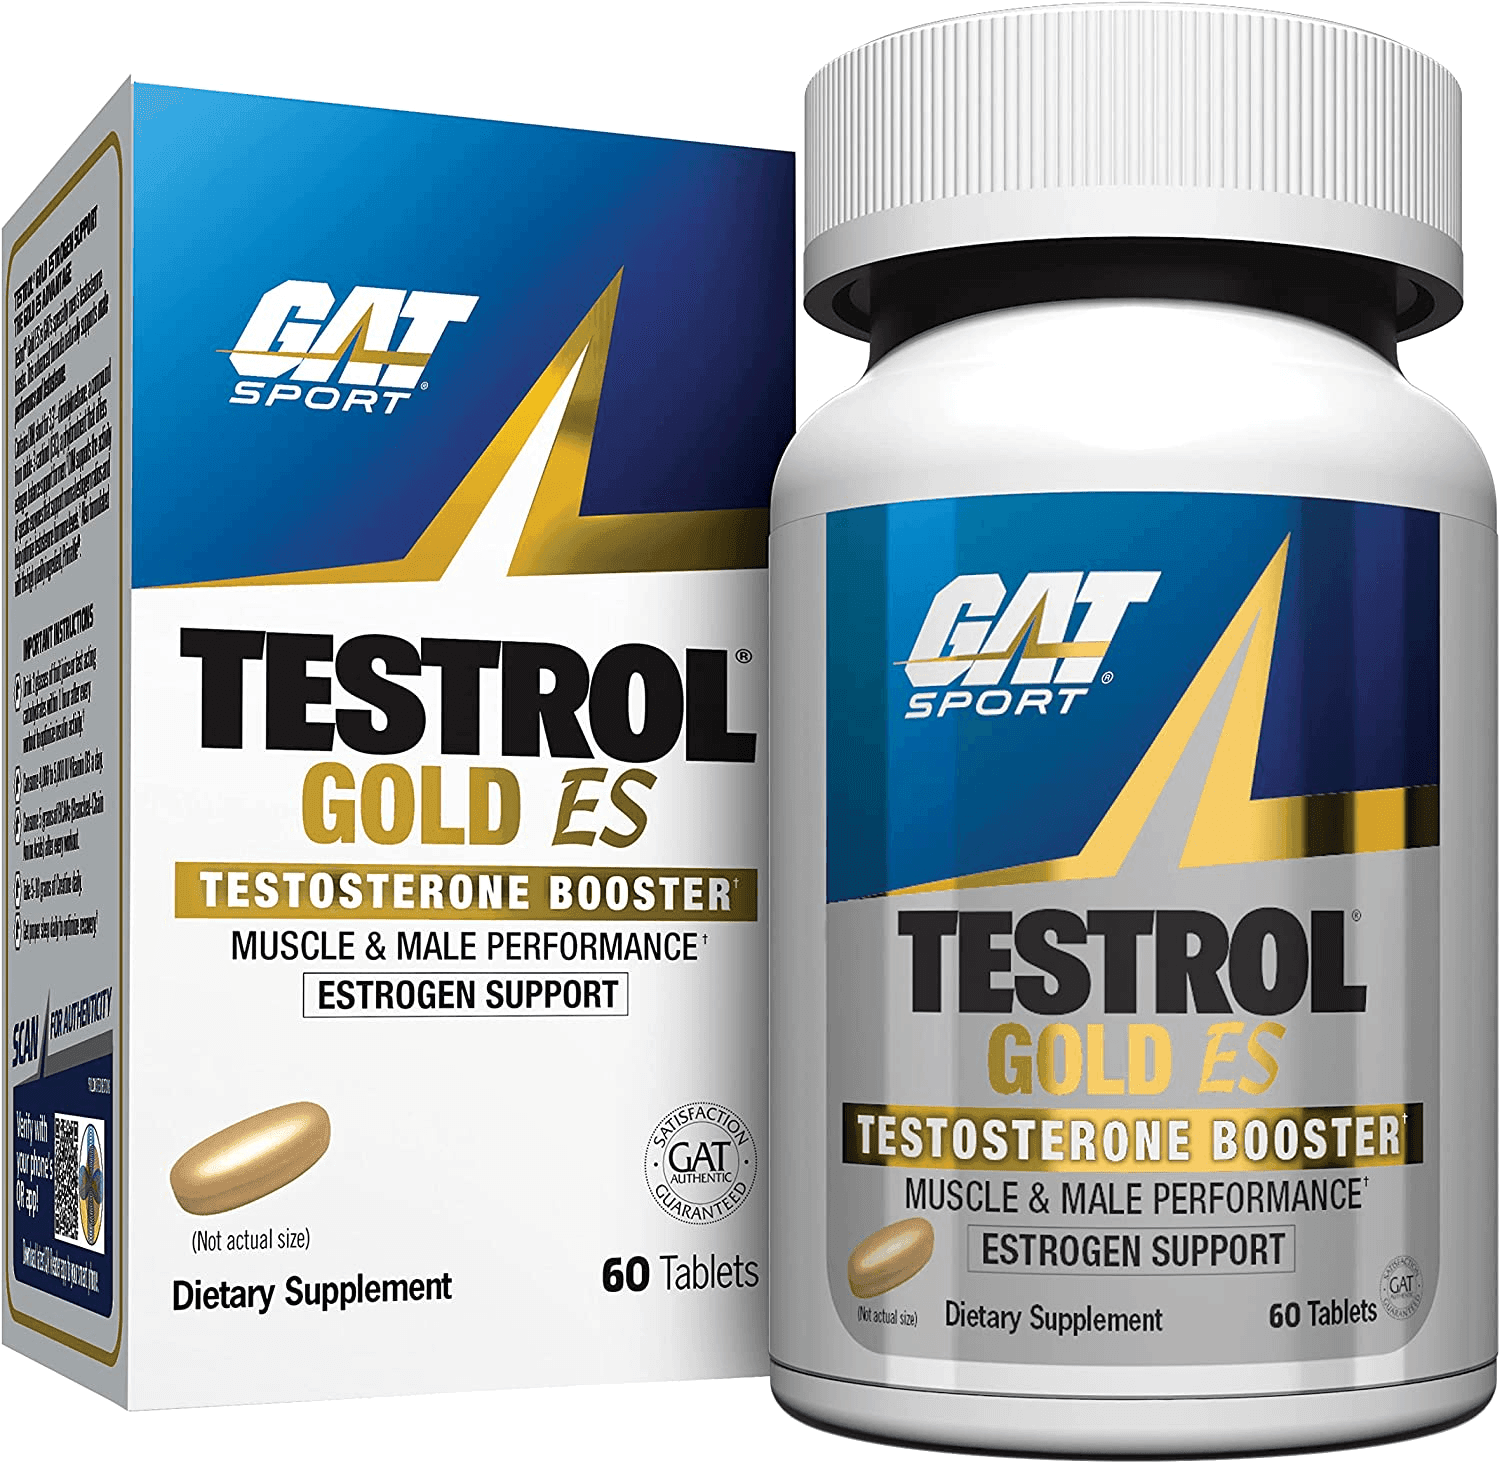 Buy GAT Testrol Gold ES Testosterone Boosters - 60 Tablets Online